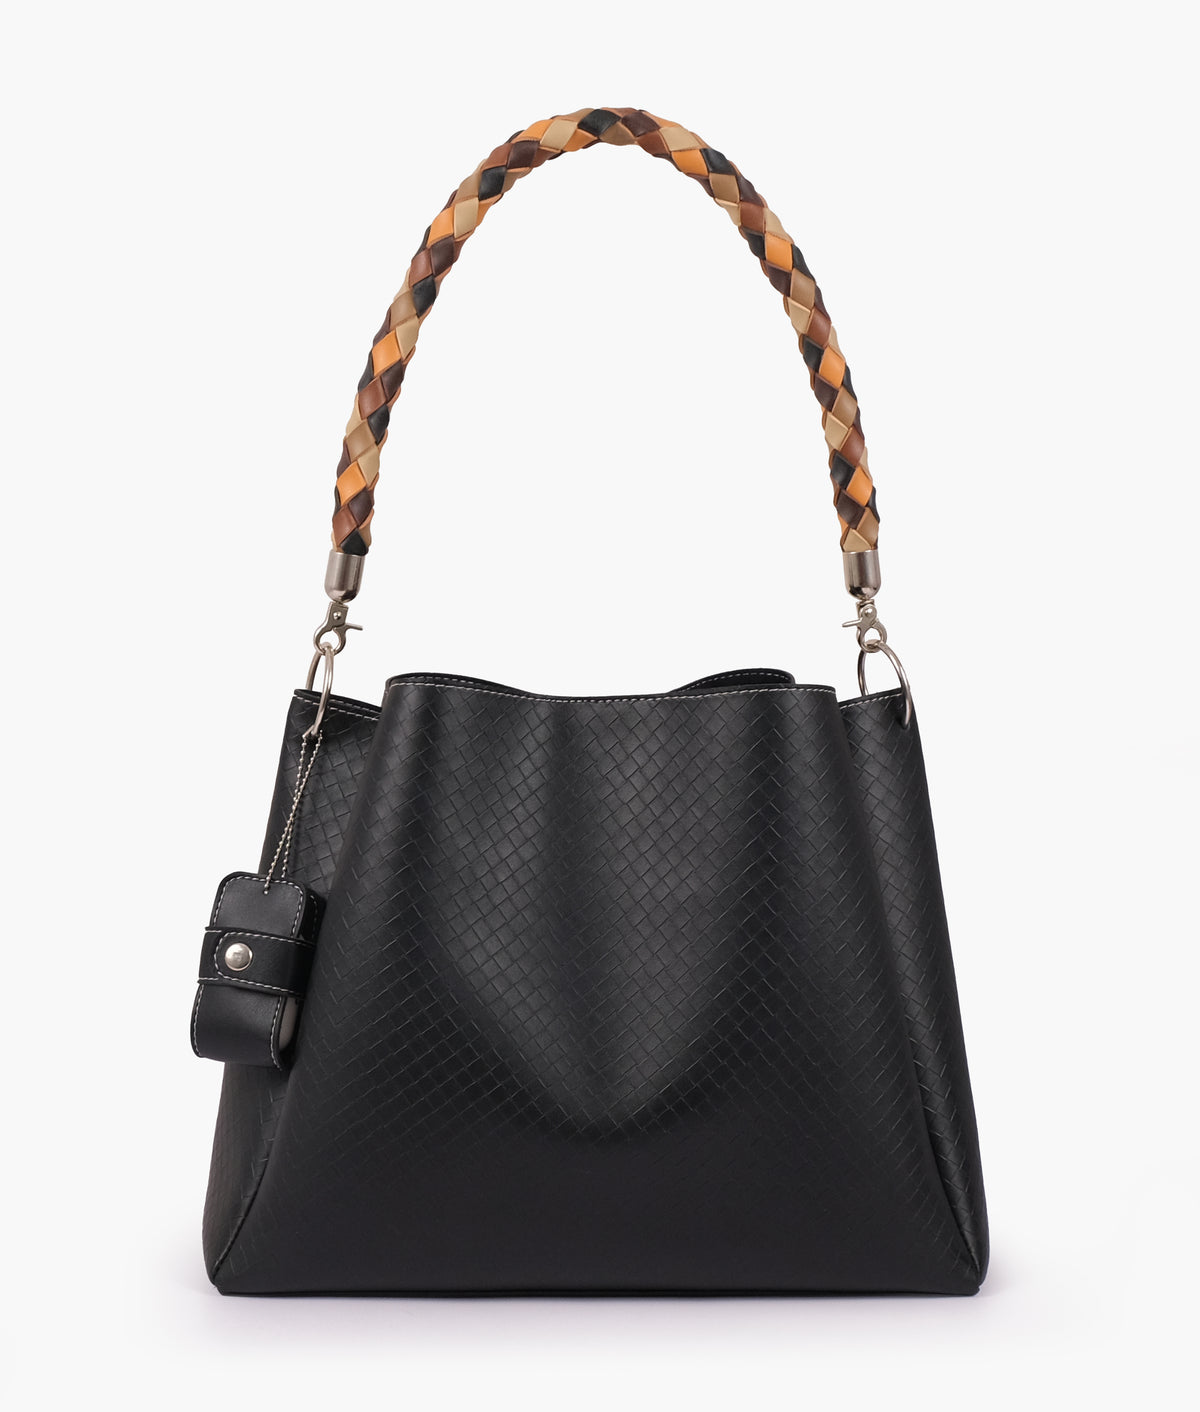 Black weaved handbag with braided handle